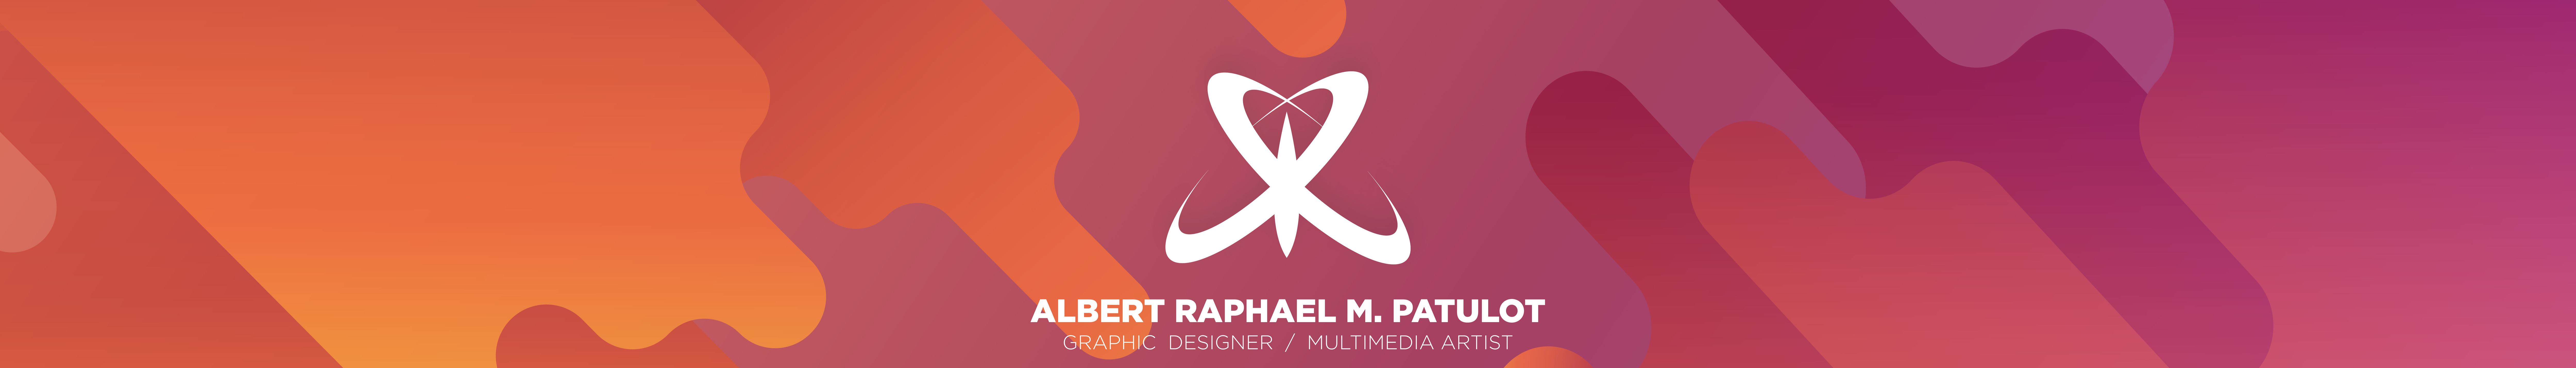 Albert Raphael Patulots profilbanner